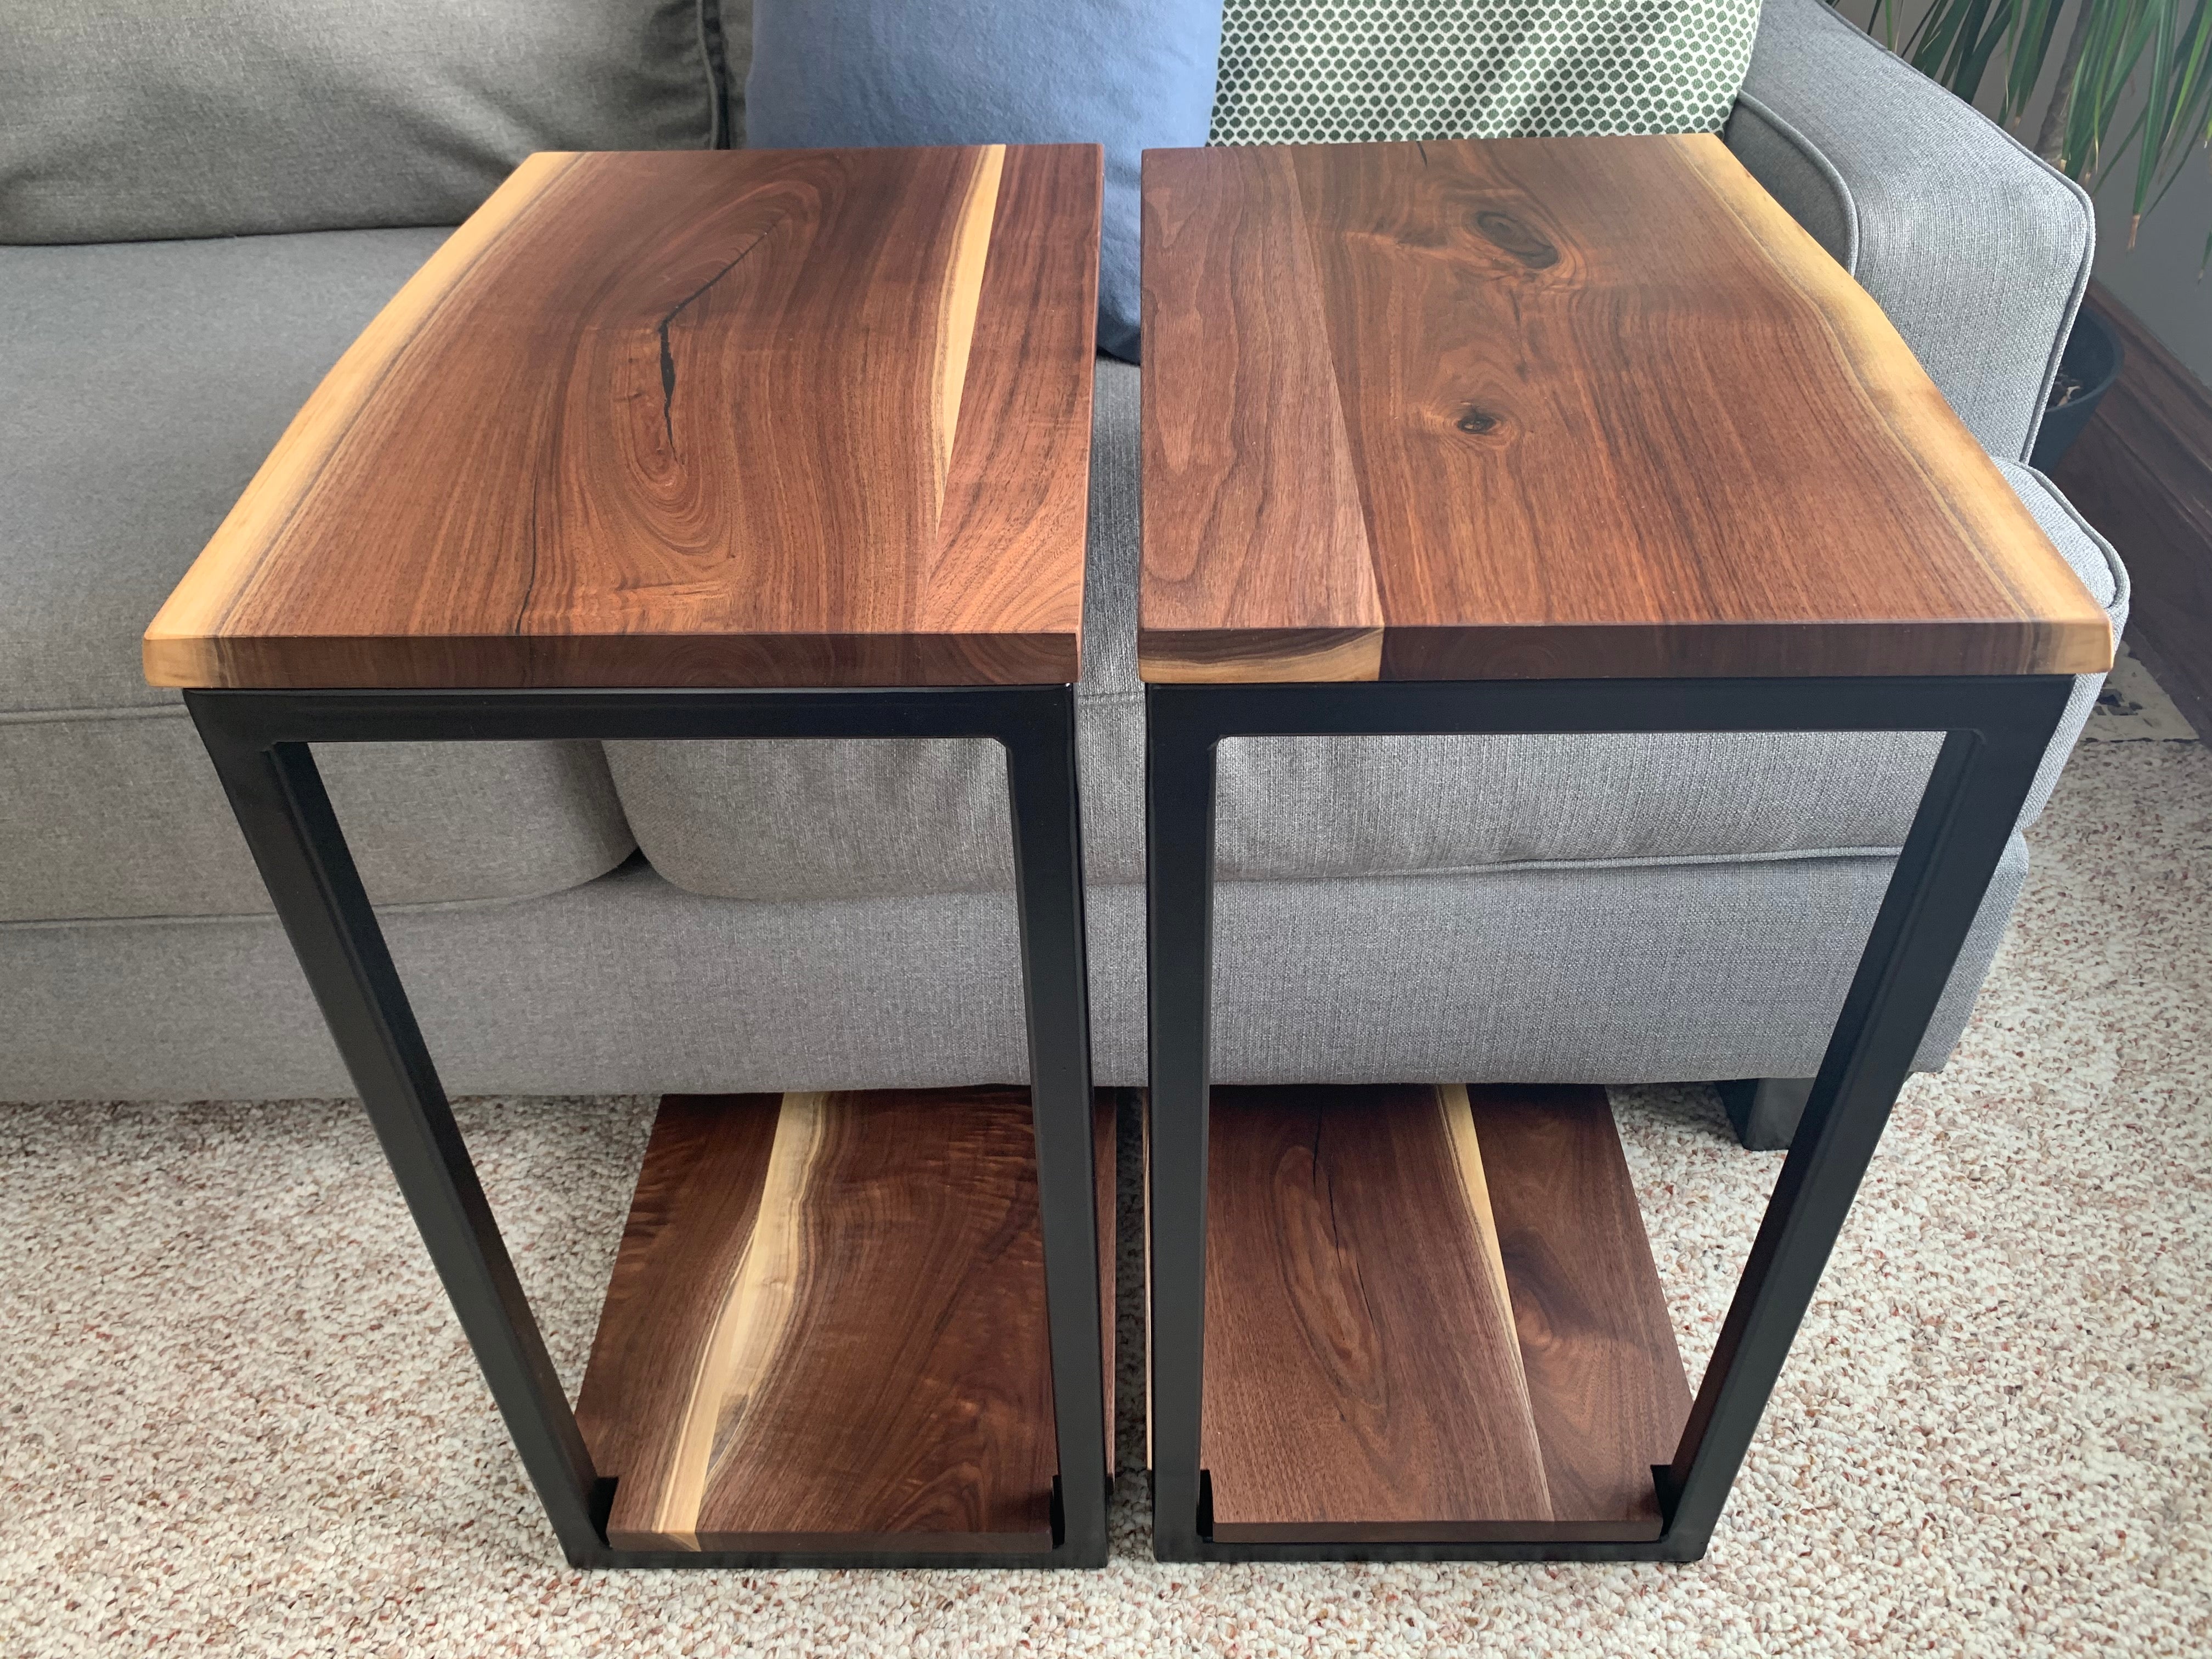 Floor Shelf Live Edge Walnut Wood C Table Handmade Furniture in Iowa, USA